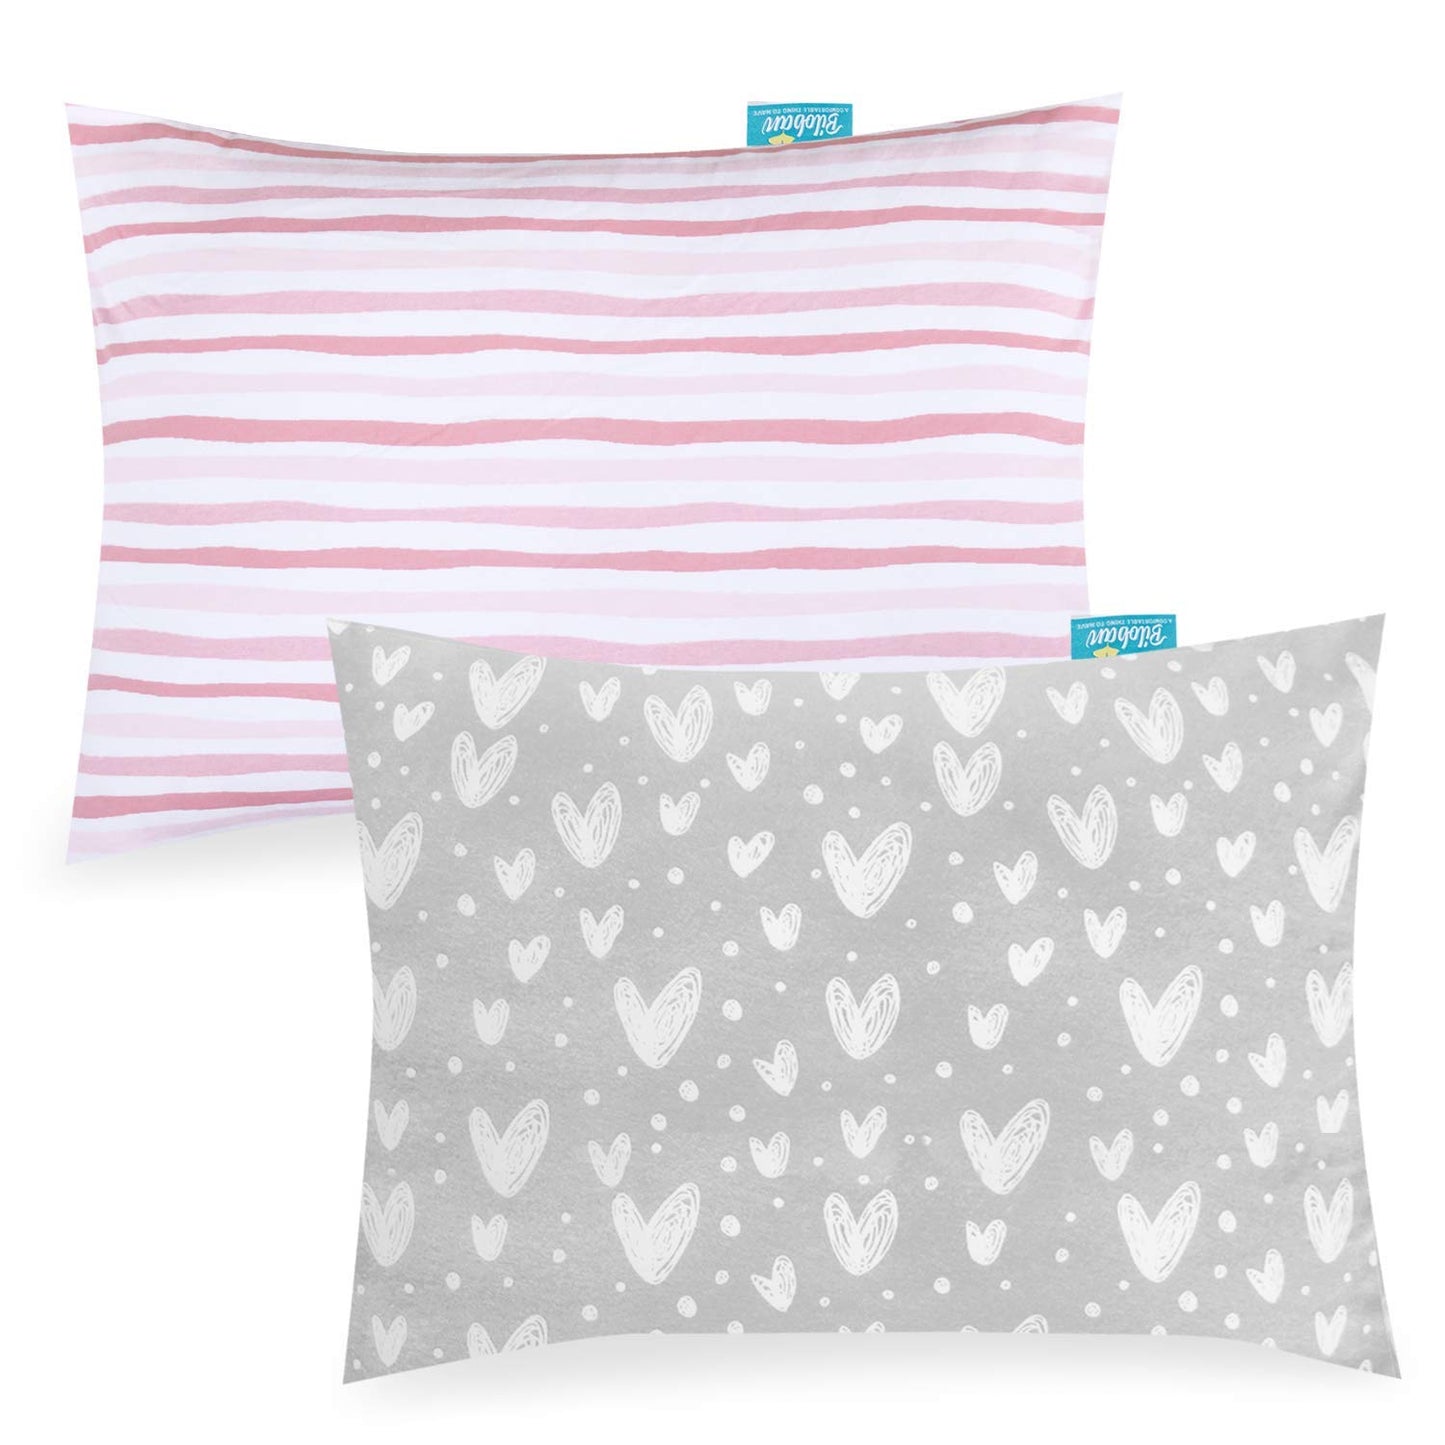 Toddler Pillowcase - 2 Pack, Ultra Soft 100% Jersey Cotton, Envelope Style, Grey & Pink - Biloban Online Store